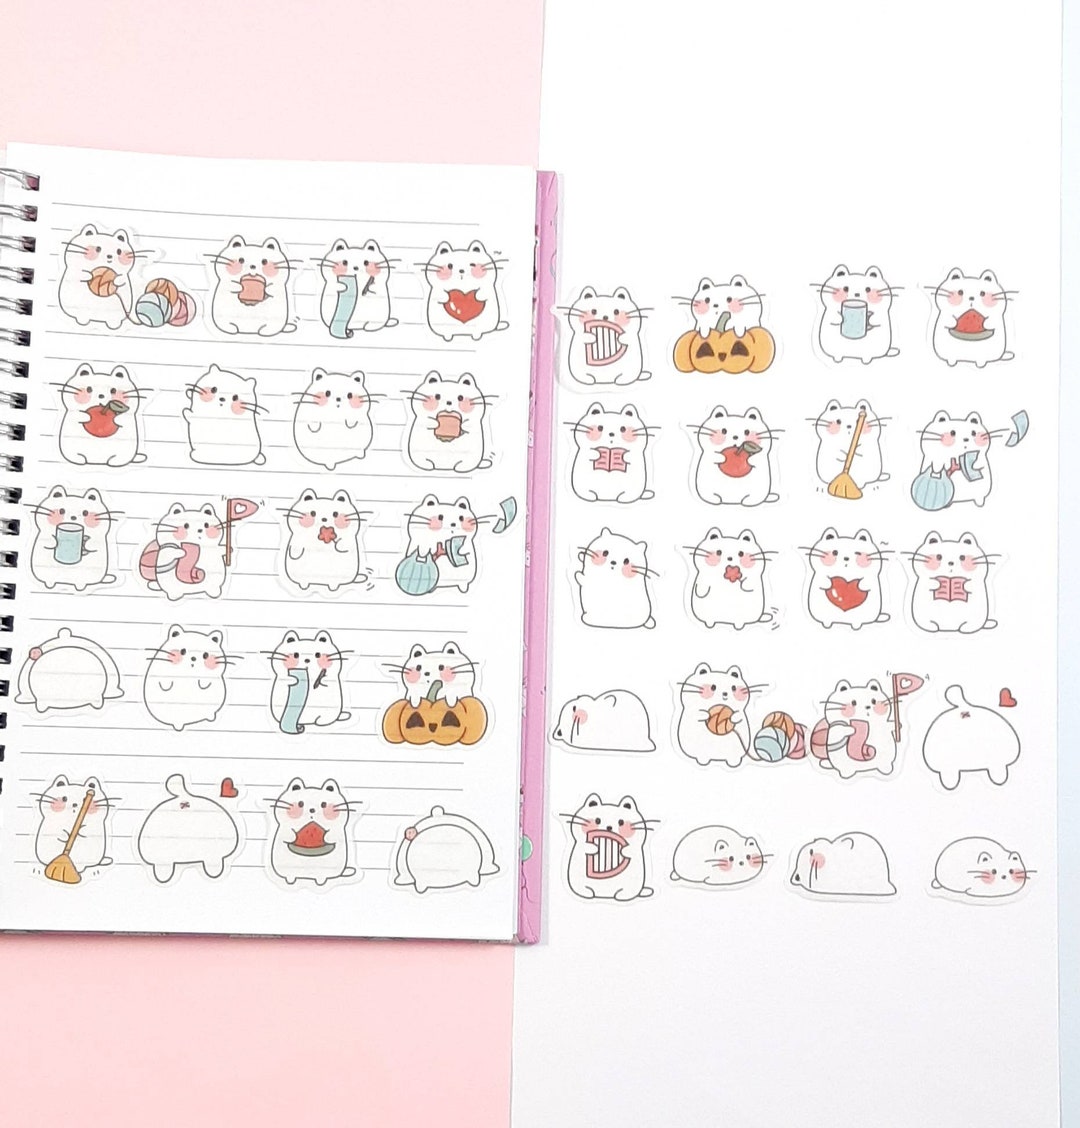  Cute Animal Sticker Set - 100 Sheets Kawaii Dog Bear Rabbit  Hamster Decorative Scrapbook Stickers for Bullet Journaling Planner DIY  Craft Album Calendar Laptop Phone Case Water Bottle